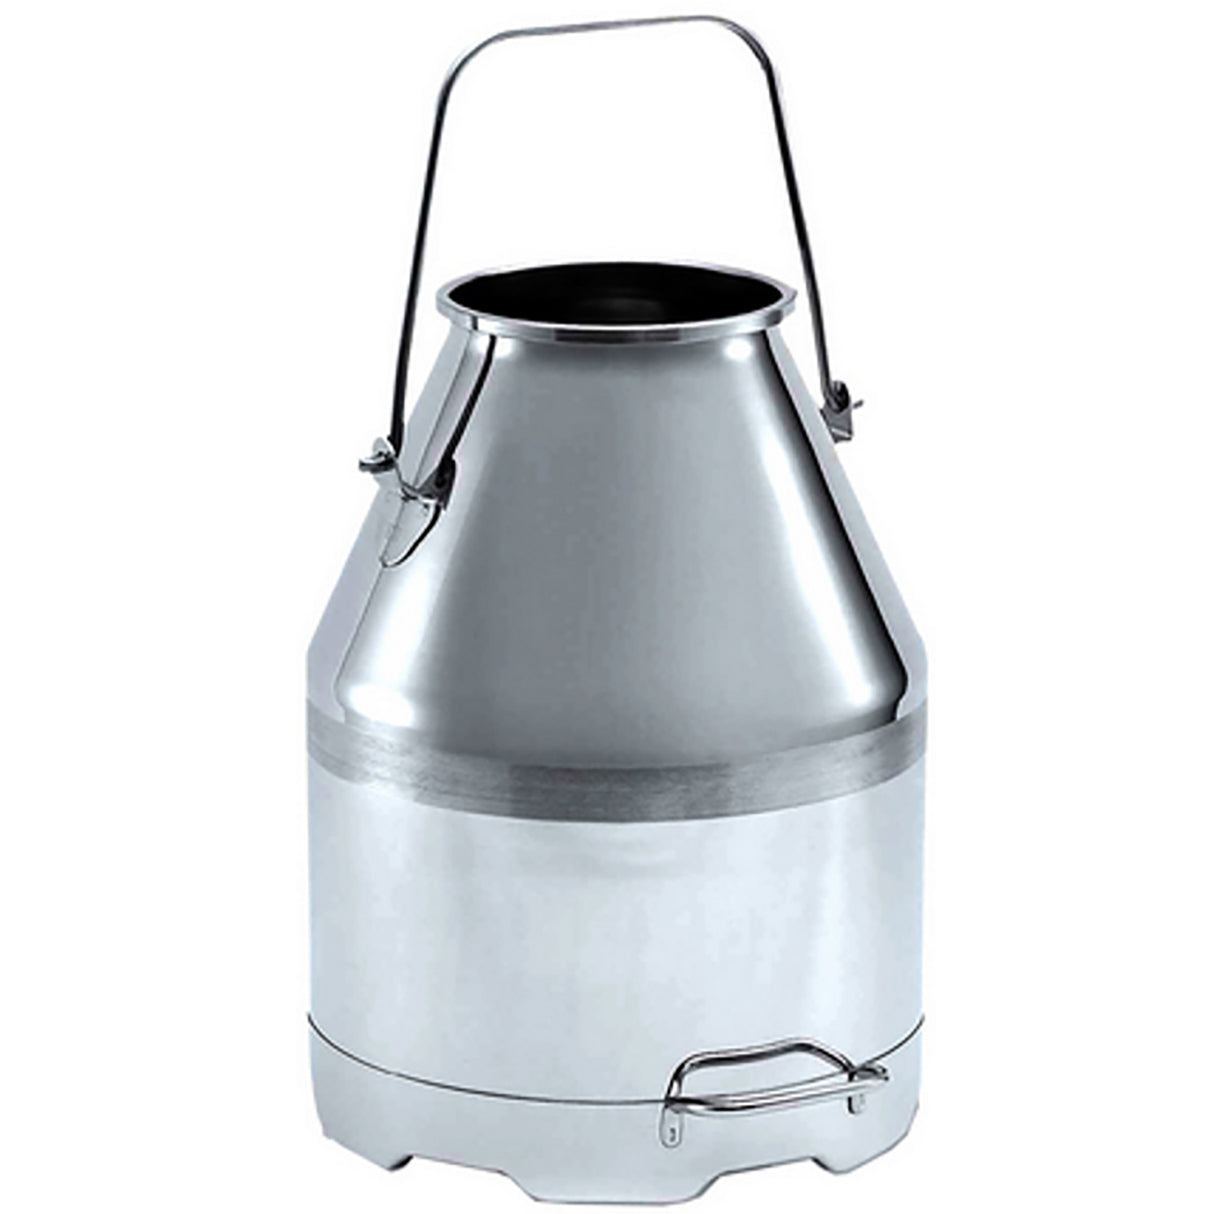 Stainless steel milk bucket Completely stainless steel.